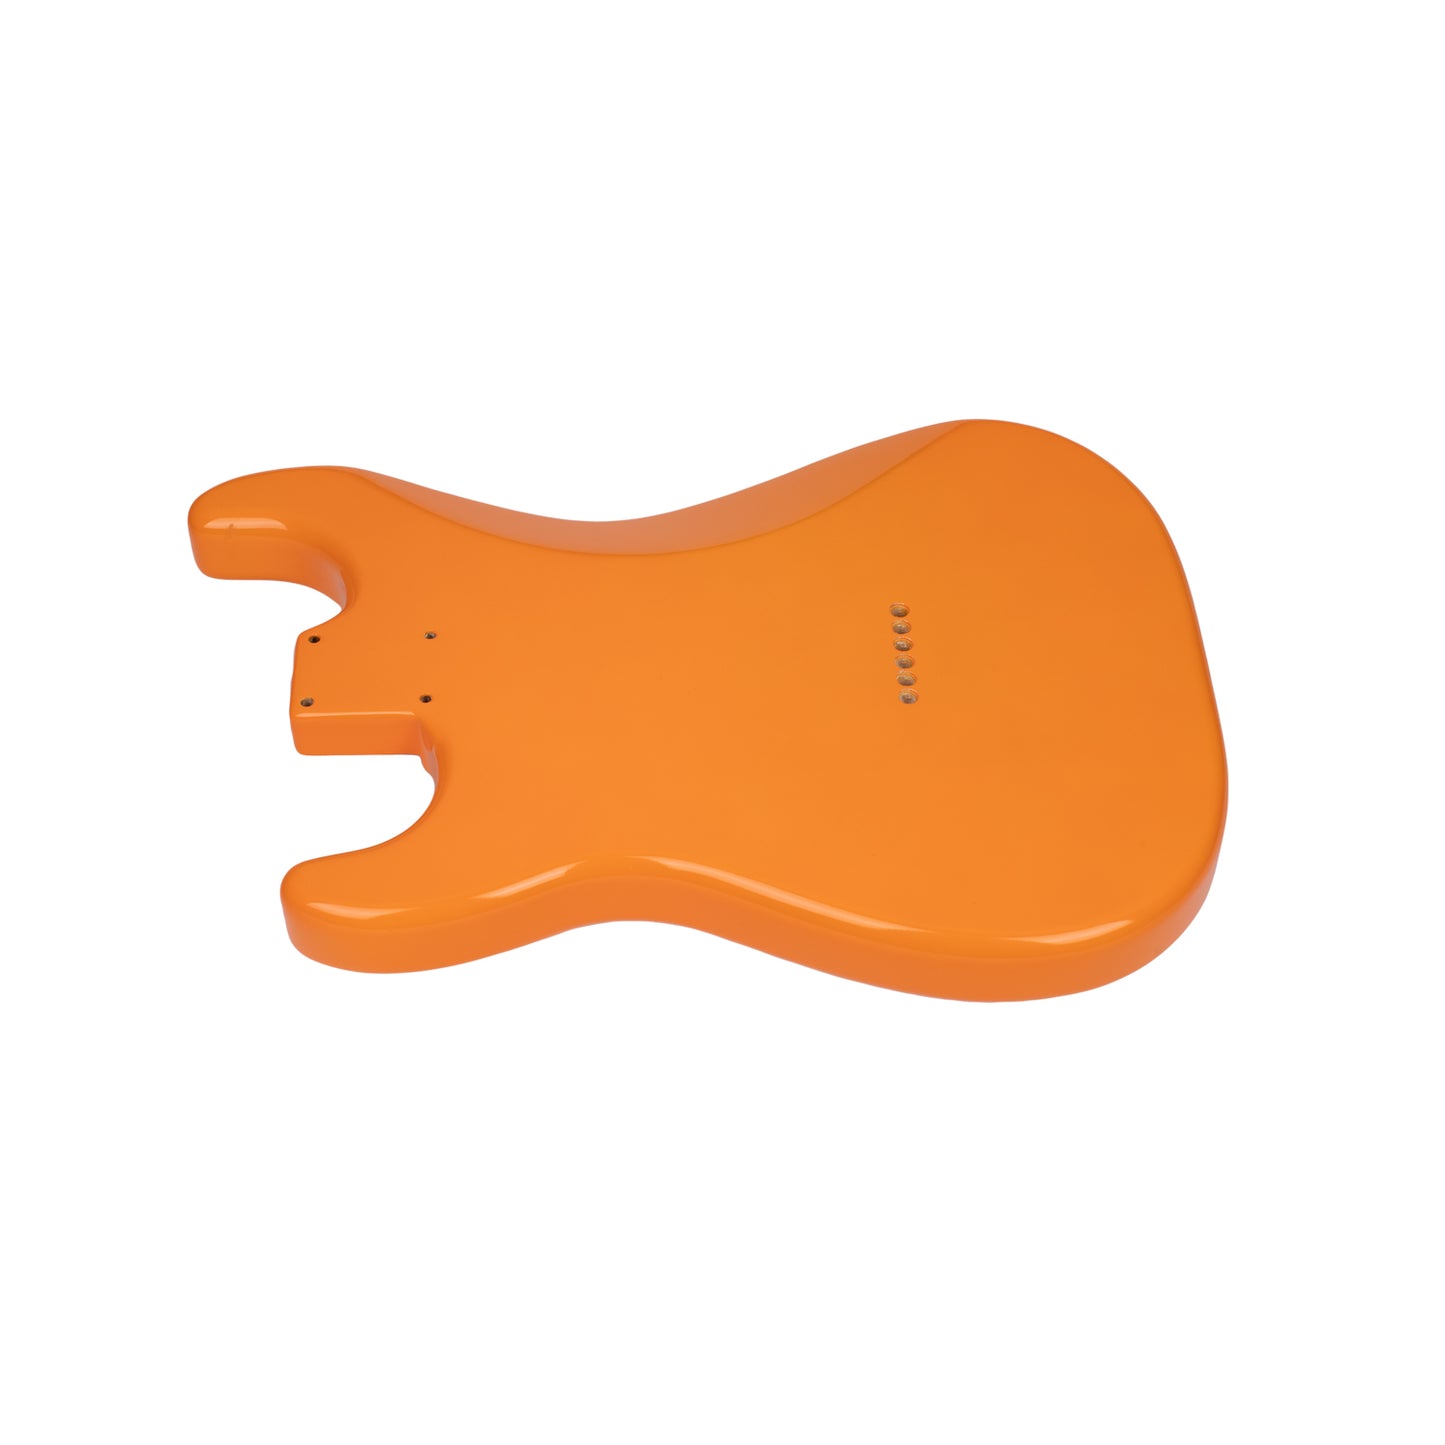 AE Guitars® S-Style Alder Replacement Guitar Body Capri Orange